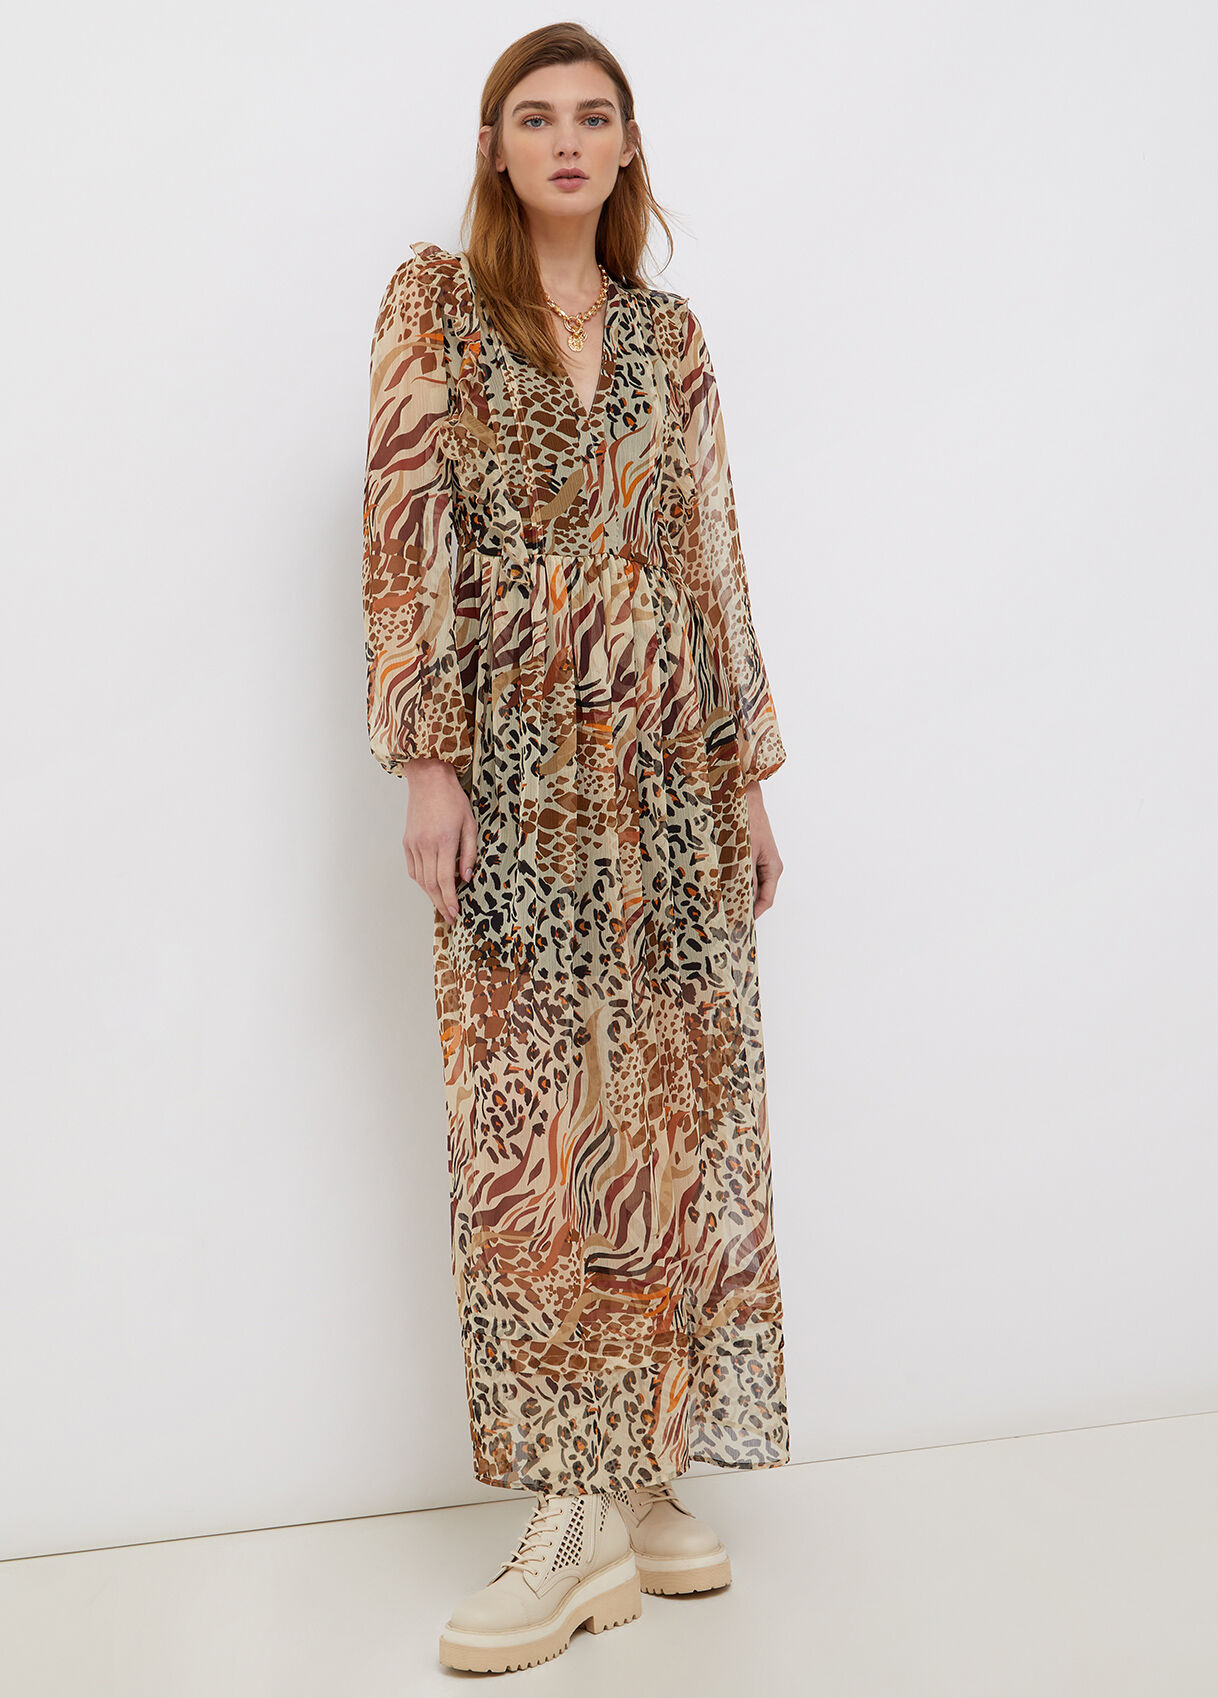 Women Leopard Print Dress Long Sleeve High Waist O Neck Casual Dress -  Trang phục nữ